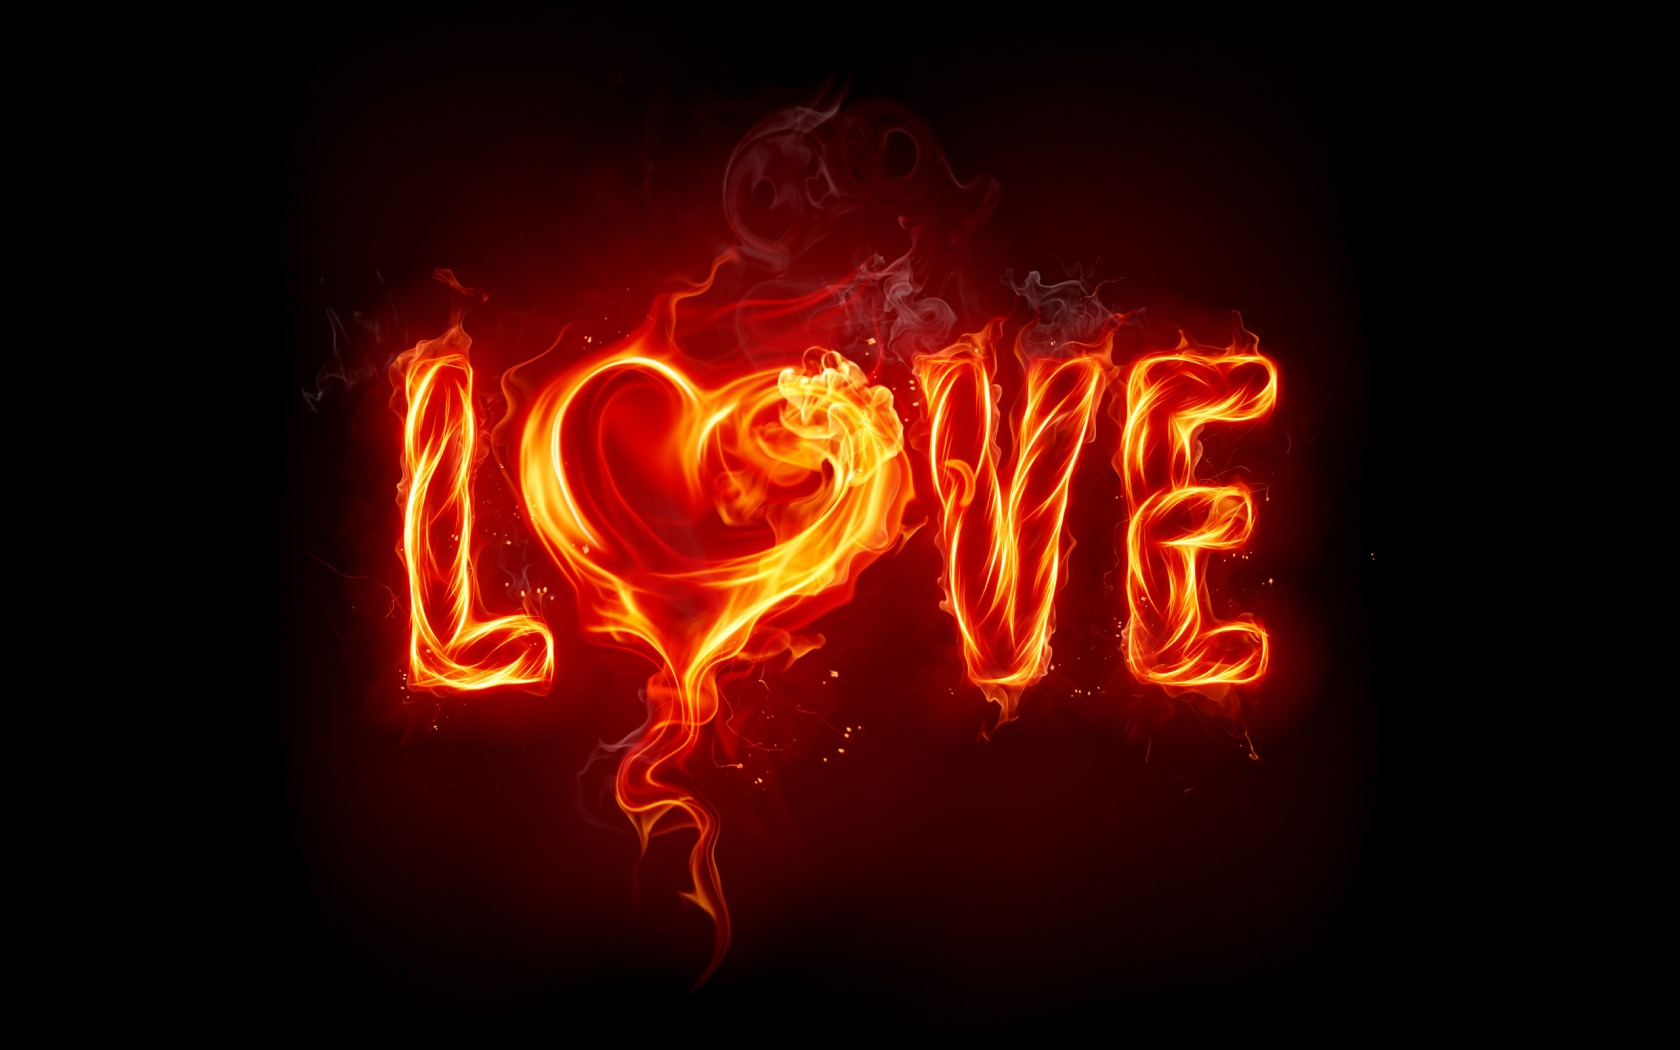 Cool Love Fire Wallpaper Image High